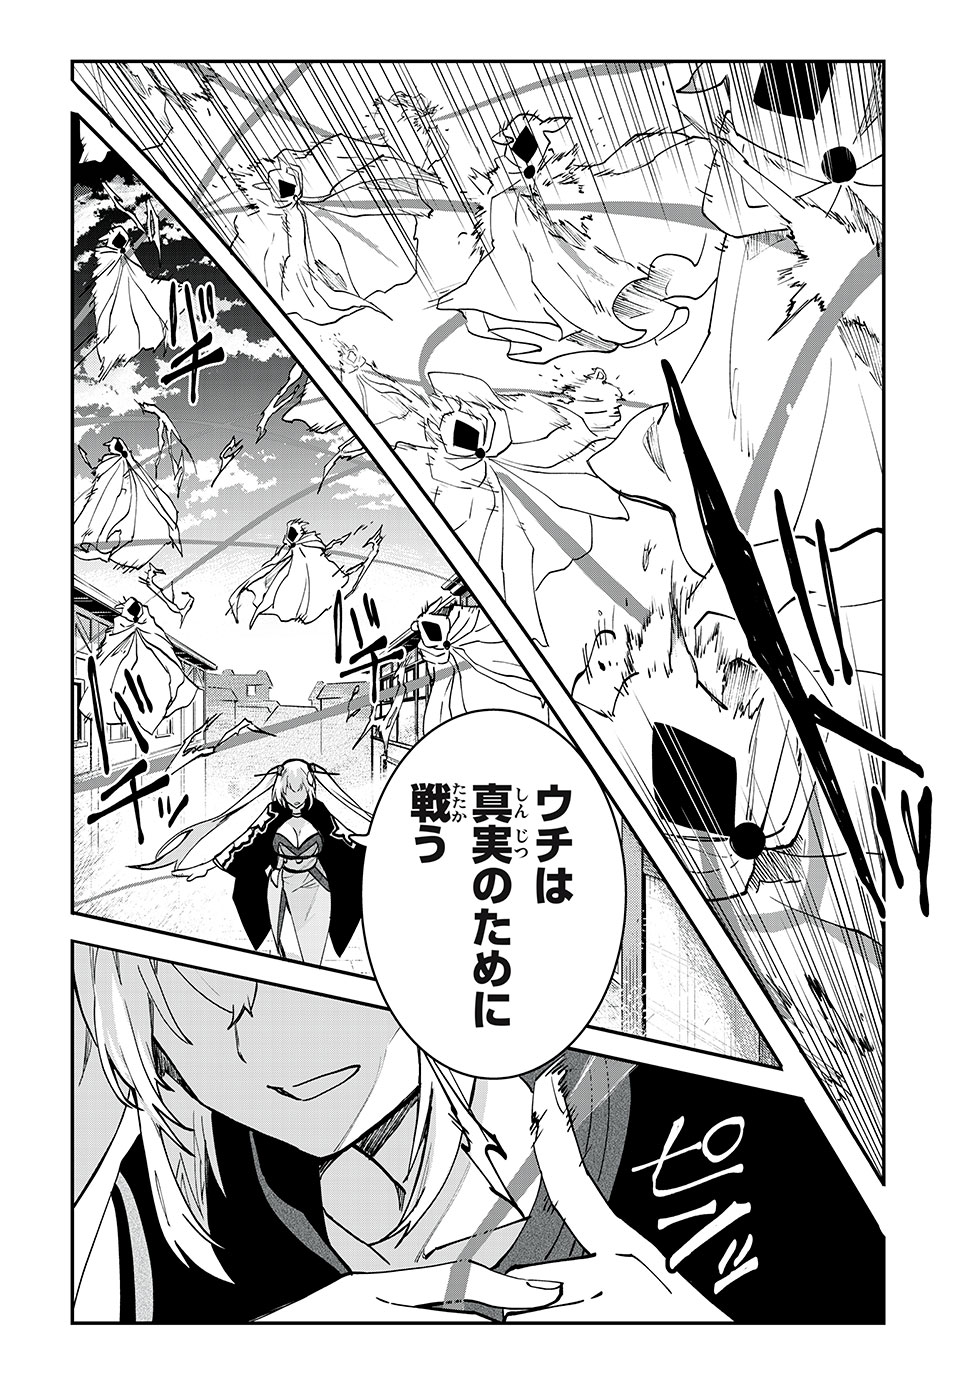 Tales of Crestoria – Togabito no Saika - Chapter 37 - Page 3